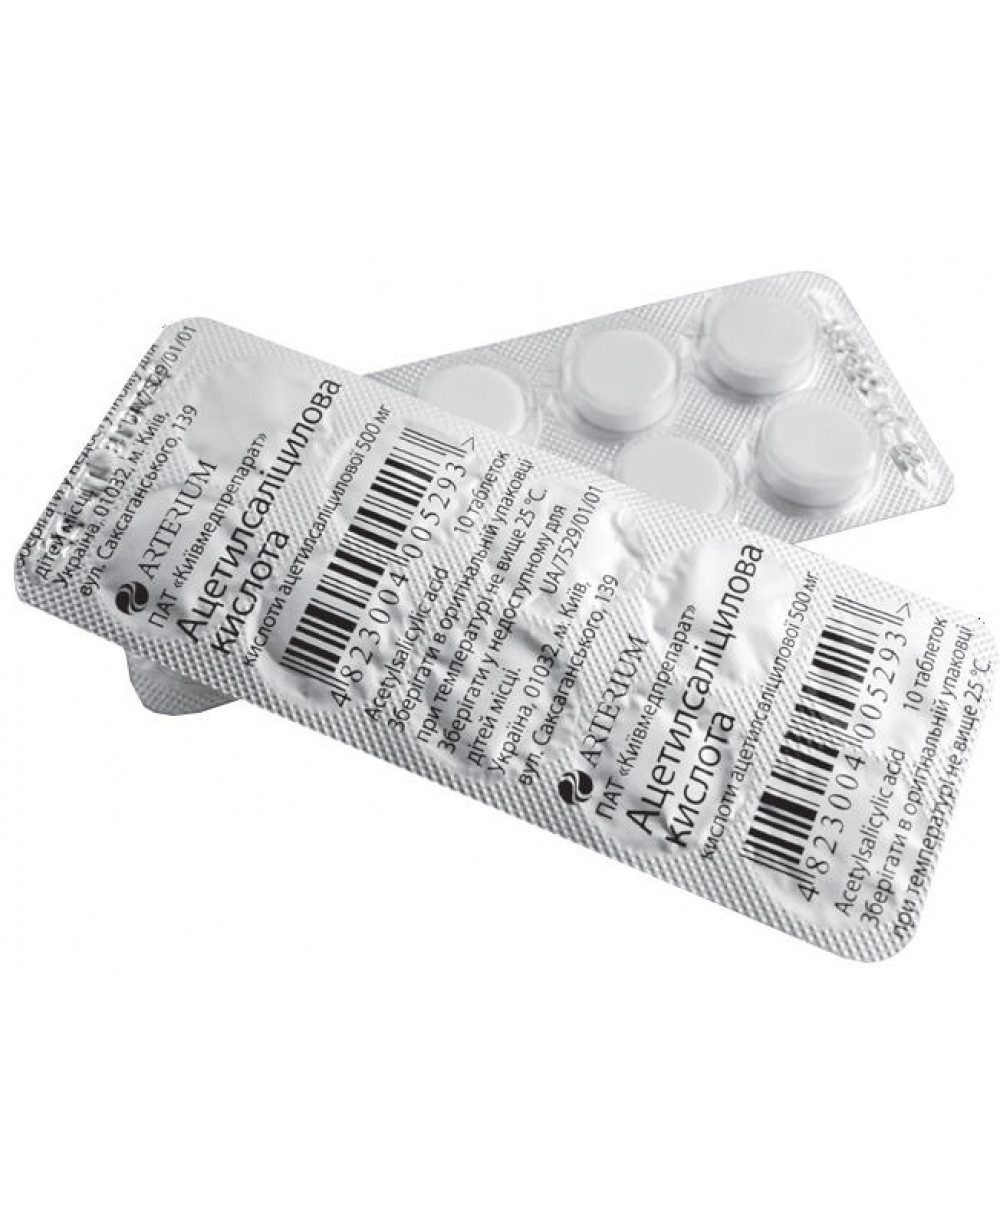 2748 БОЛ-РАН® НЕО - Paracetamol, combinations excl. psycholeptics